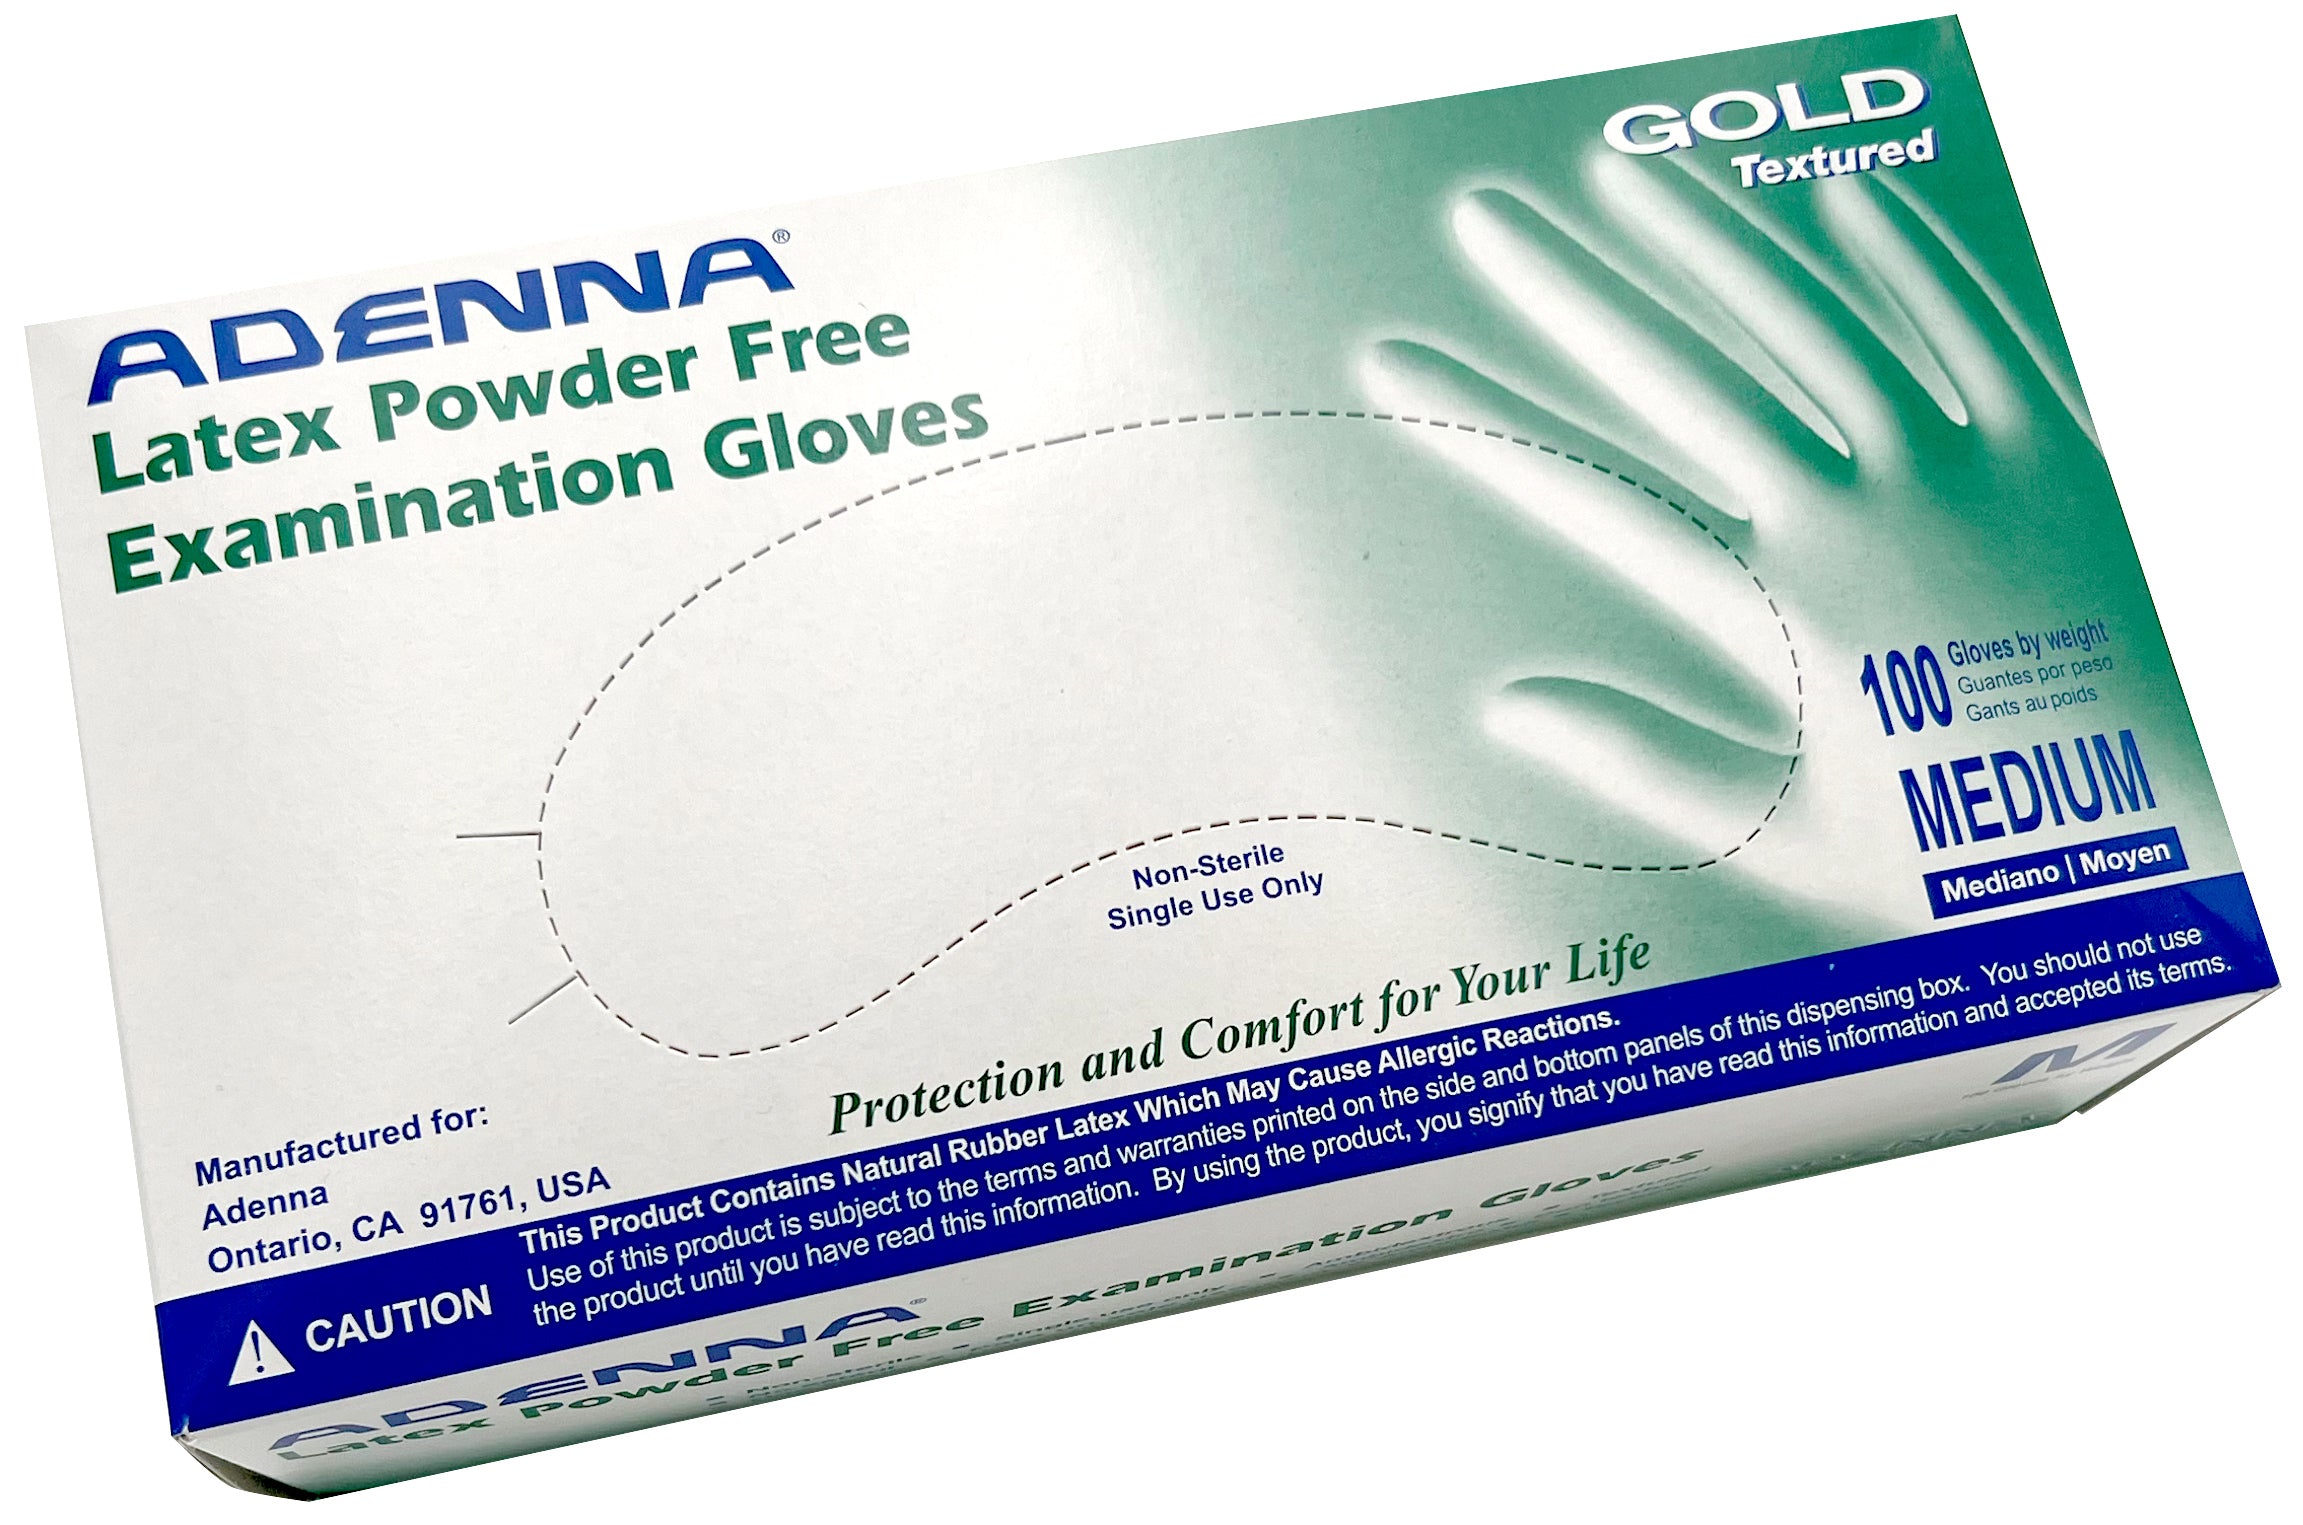 Adenna Latex Powder Free Examination Gloves 